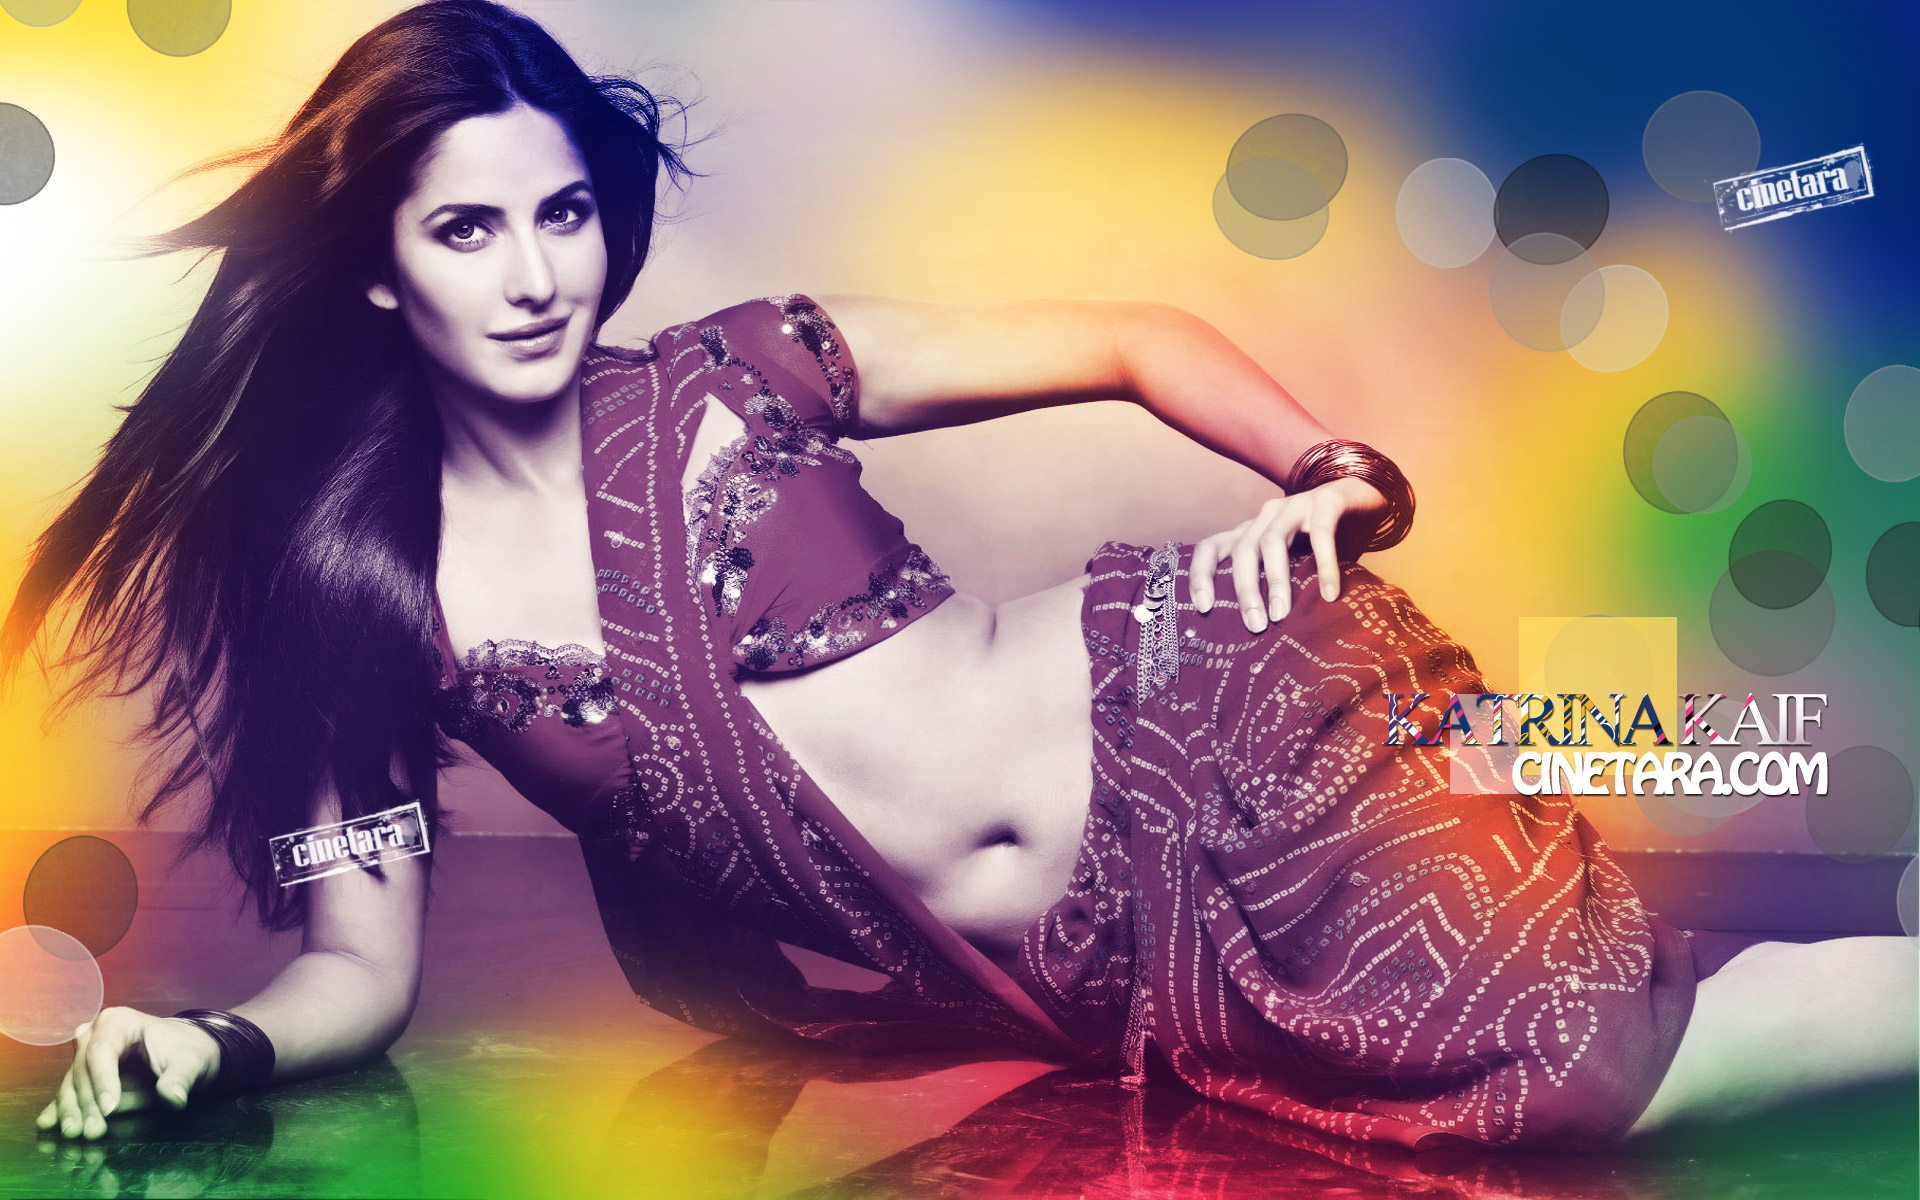 Katrina Kaif Hot In Sheila Ki Jawani - HD Wallpaper 